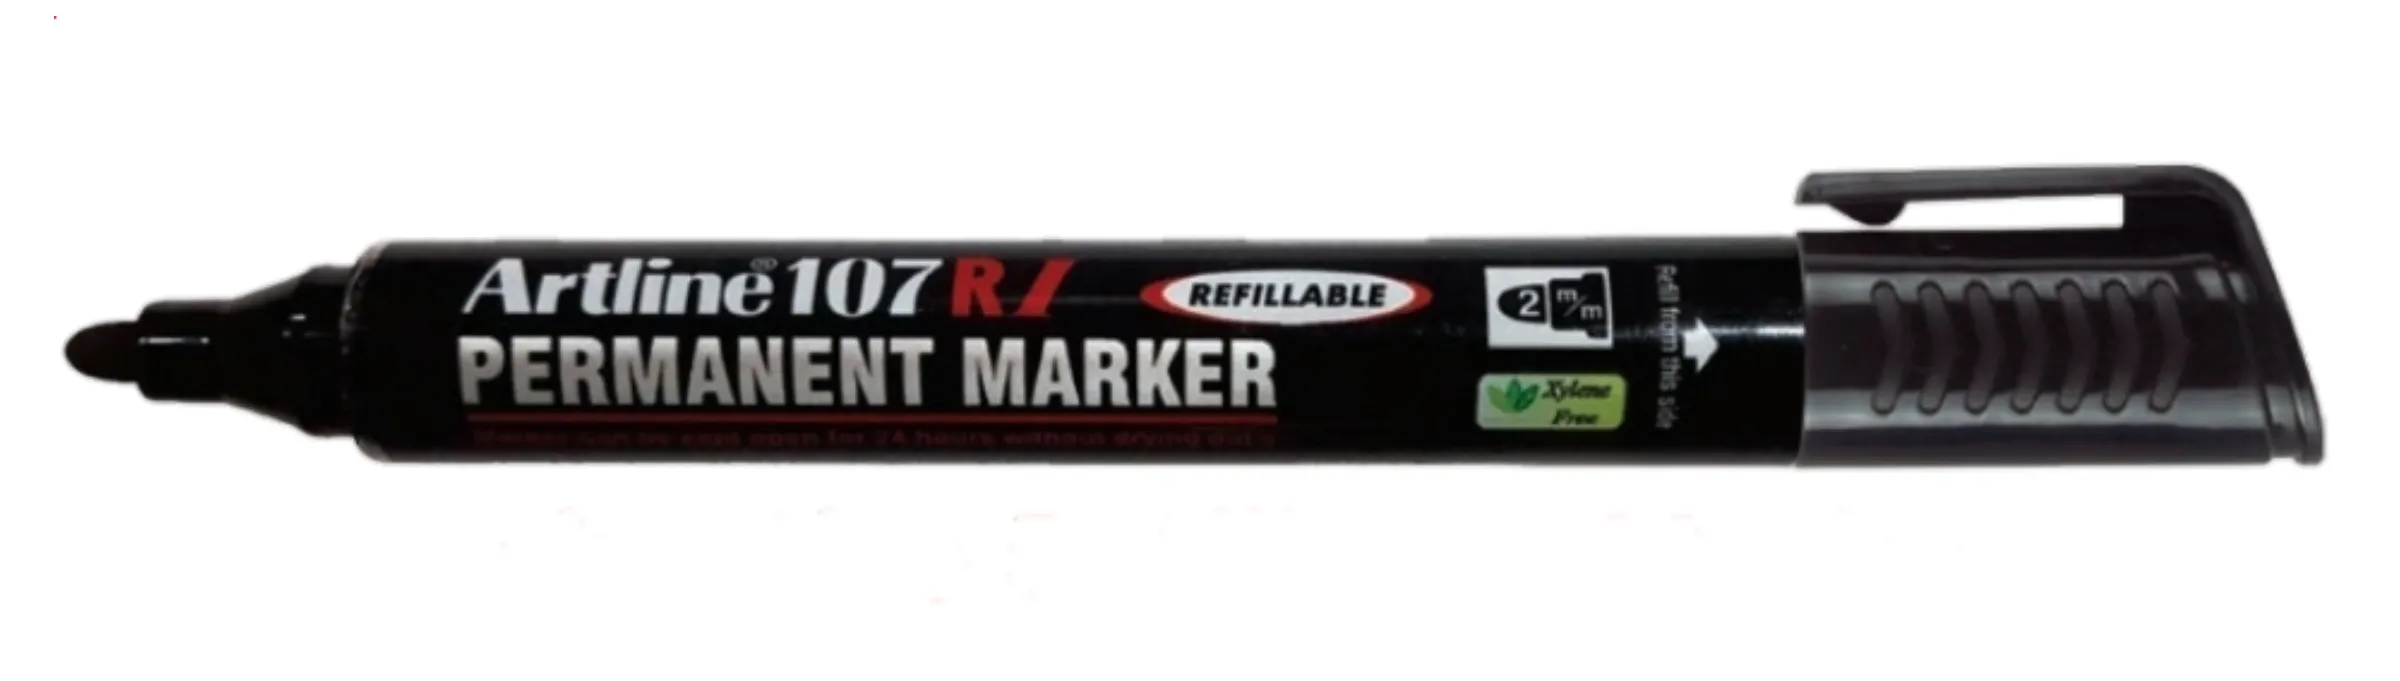 Artline Permanent Marker 107 RI Black Refillable Pack of 1 Marker